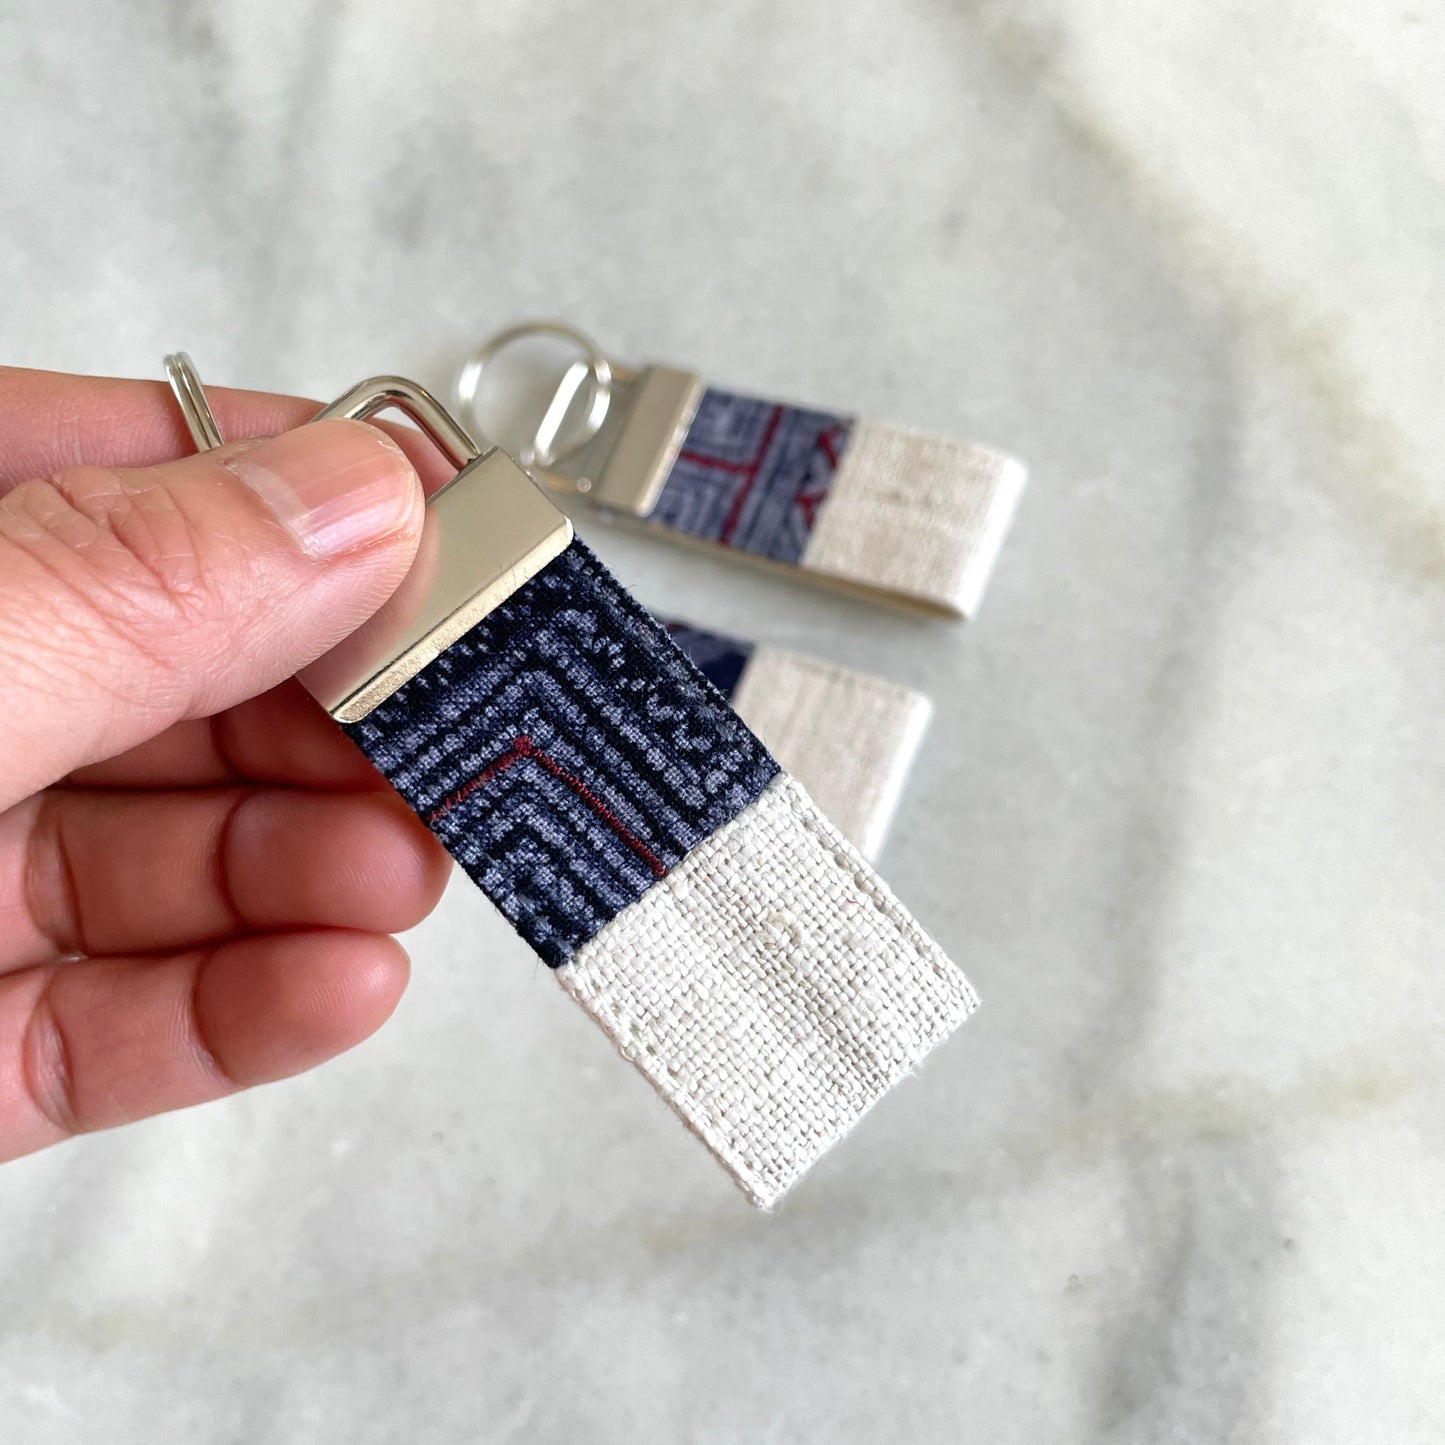 White hemp fabric keychain with vintage batik patch, stainless metal key fob